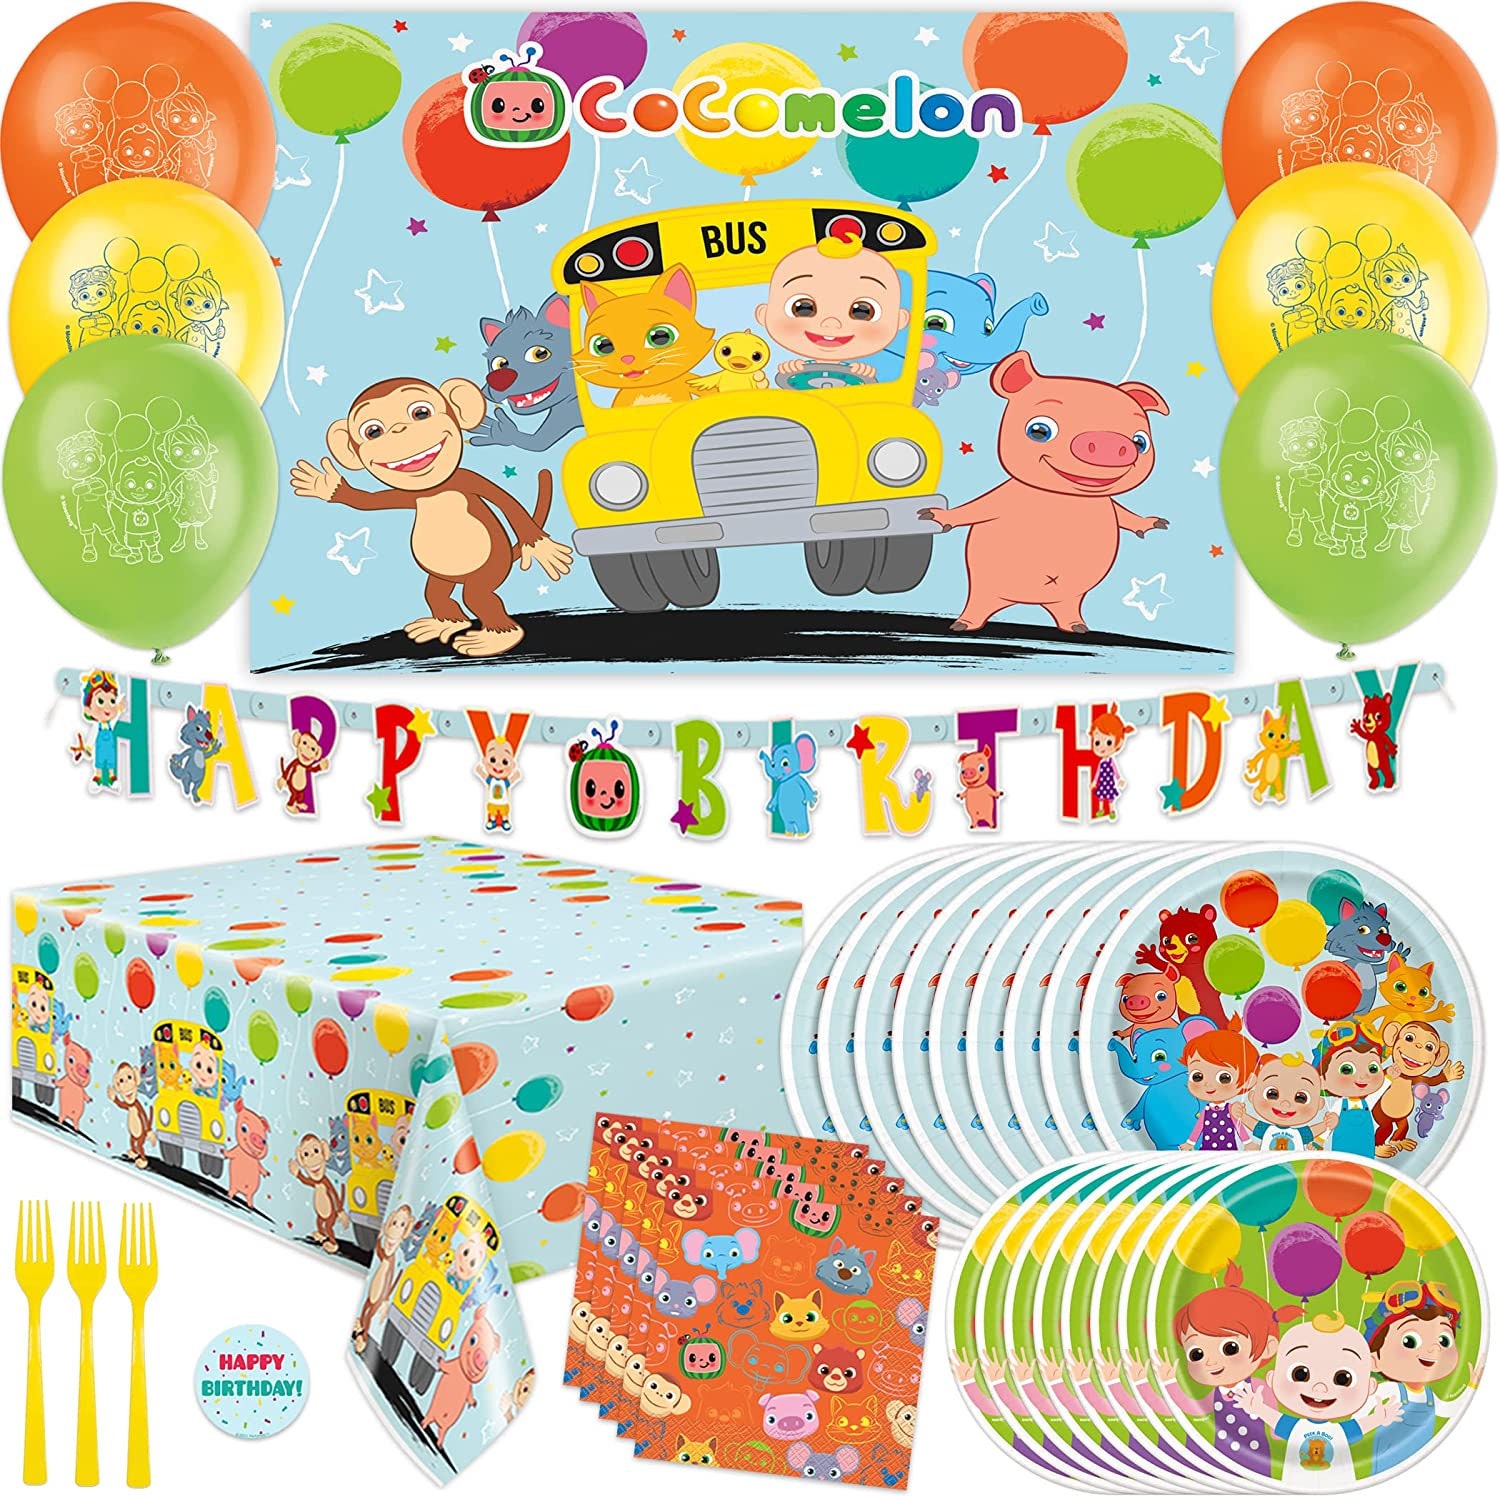 FREE! - GRATIS CoComelon: Pancarta de cumpleaños - Twinkl